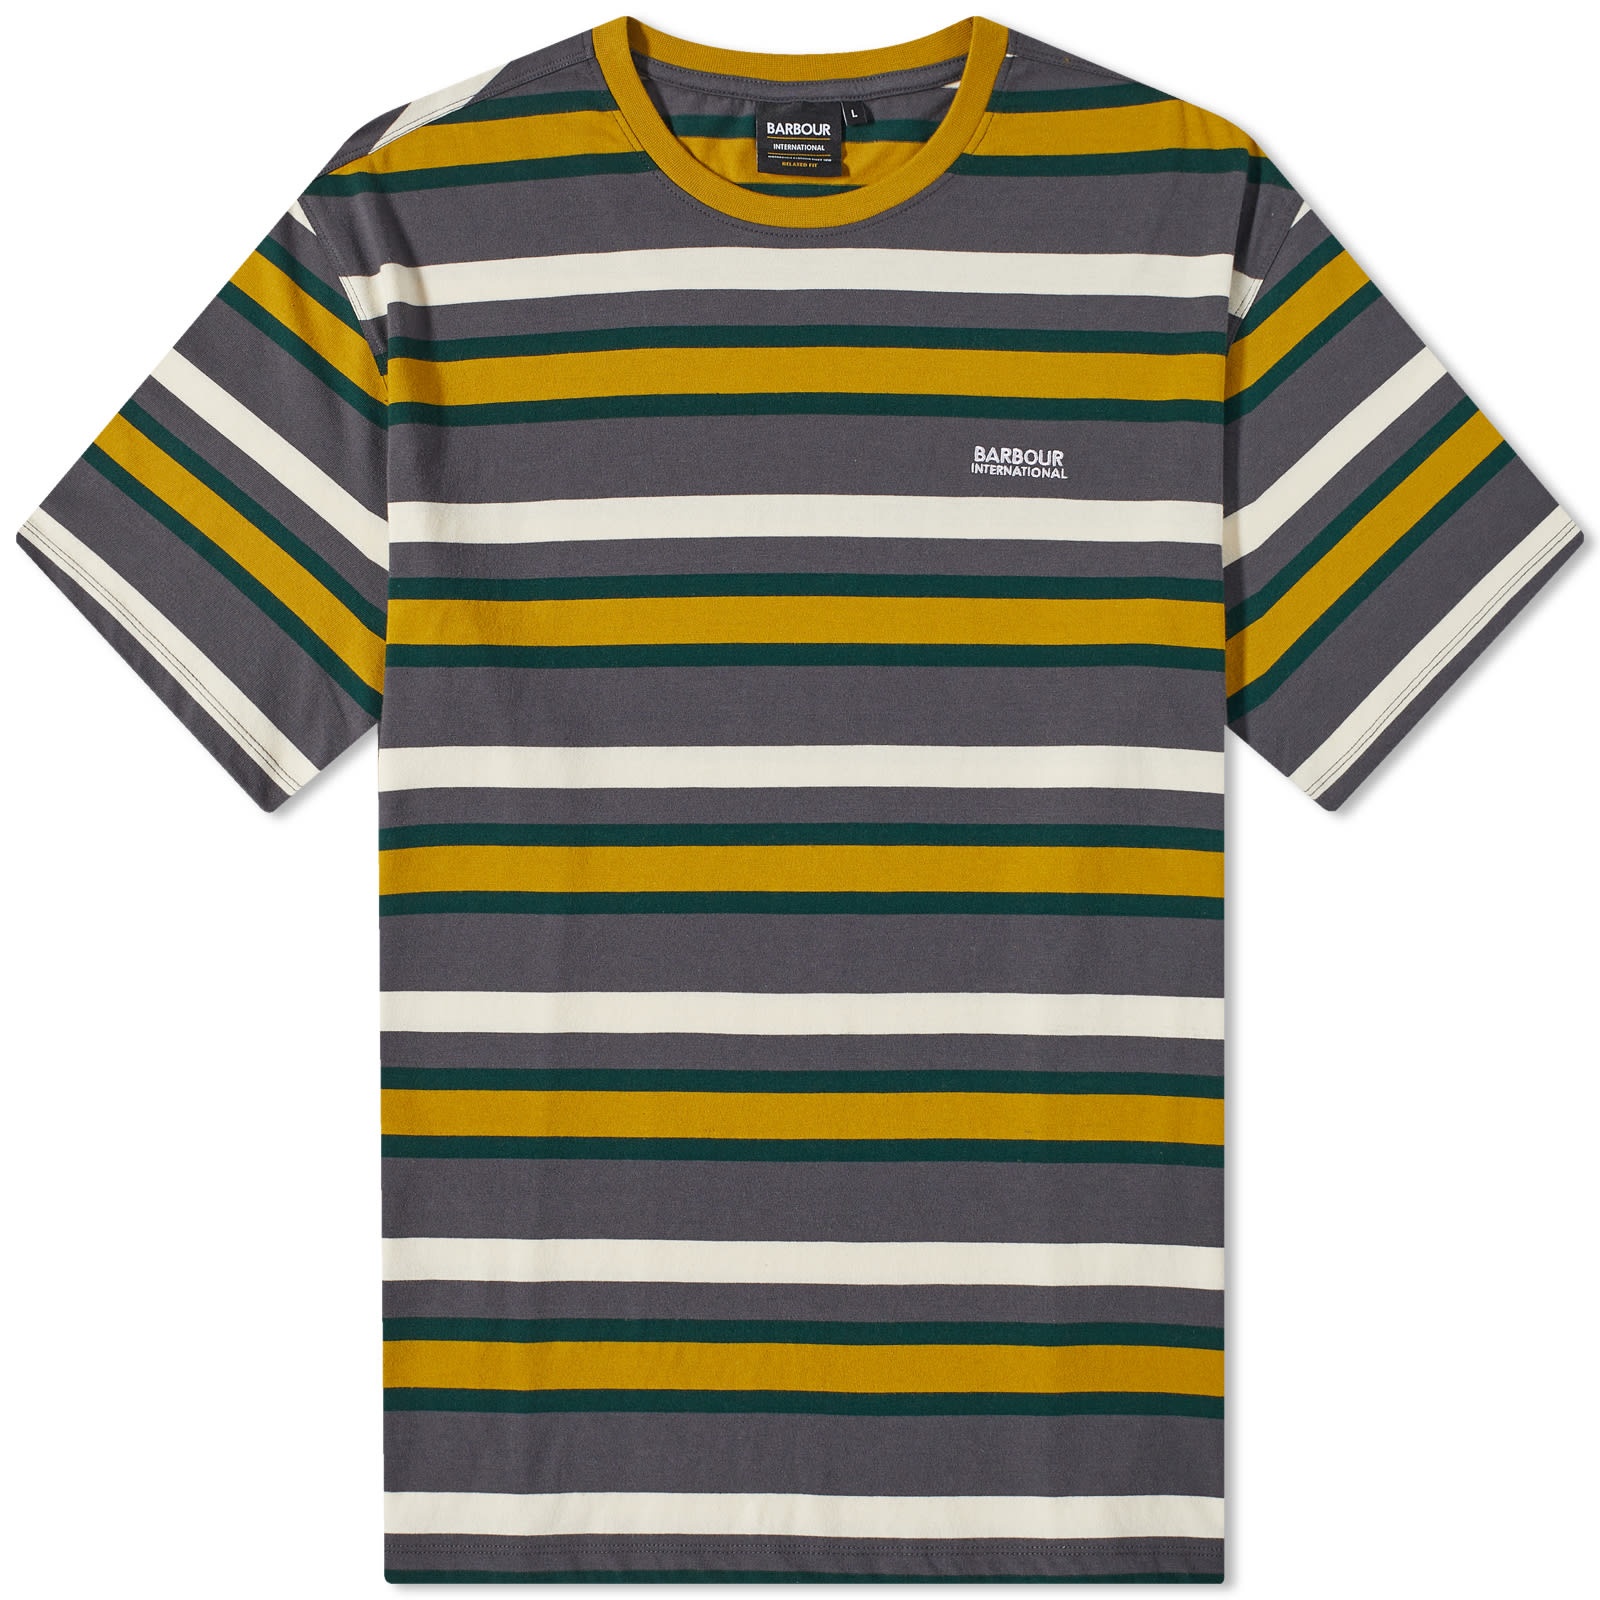 Barbour International Gauge Stripe T-Shirt - 1